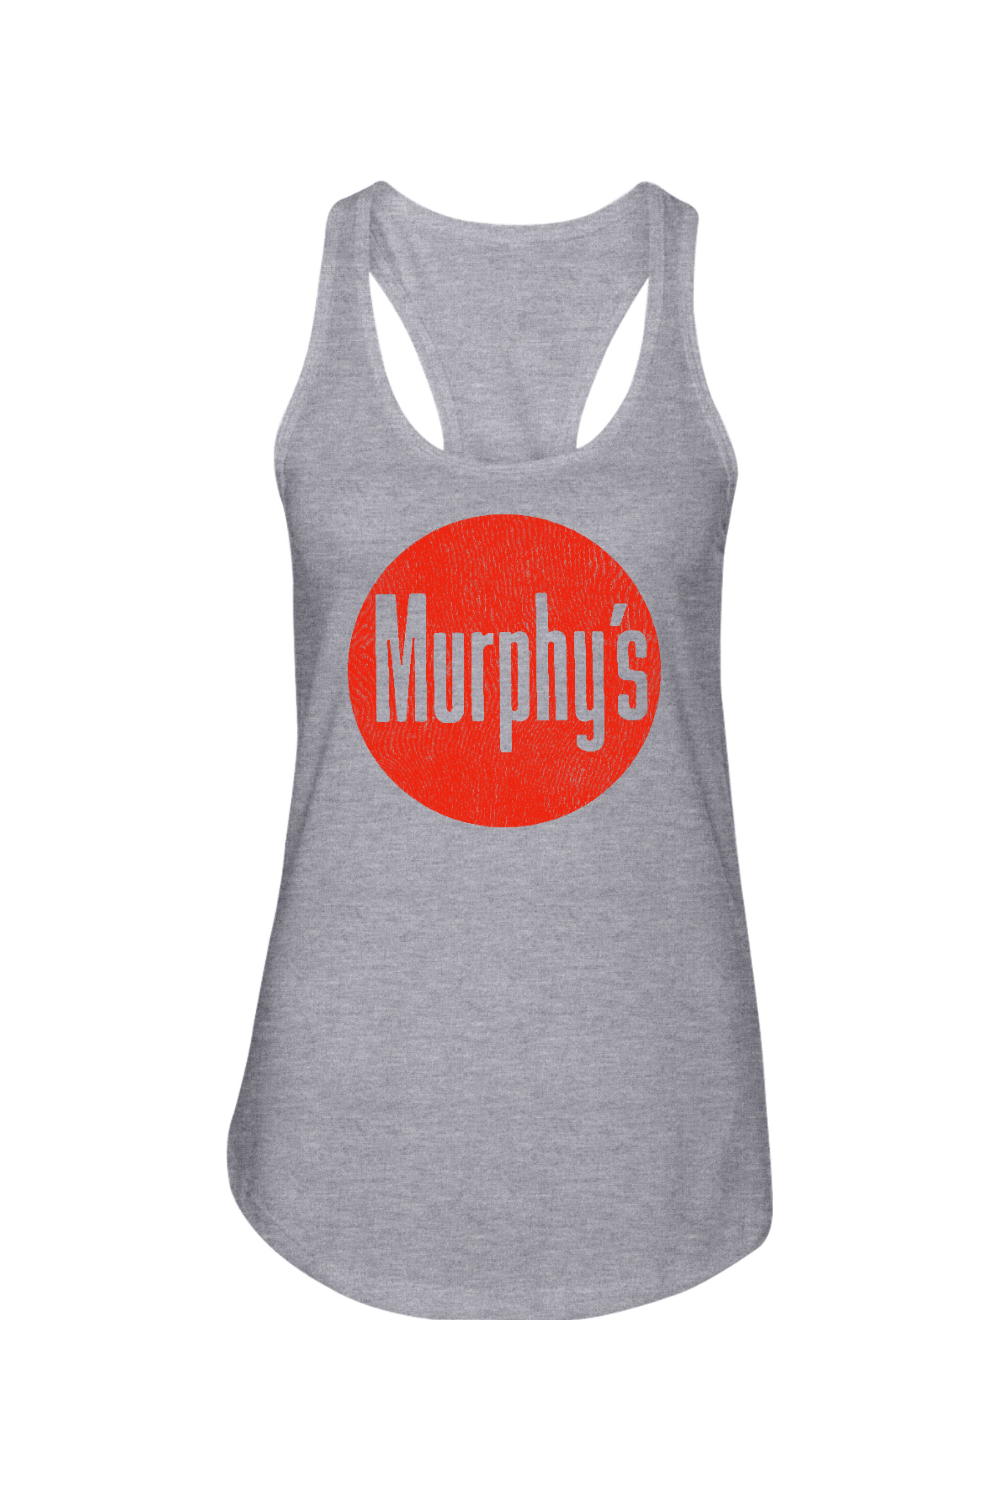 Murphy's - Ladies Racerback Tank - Yinzylvania